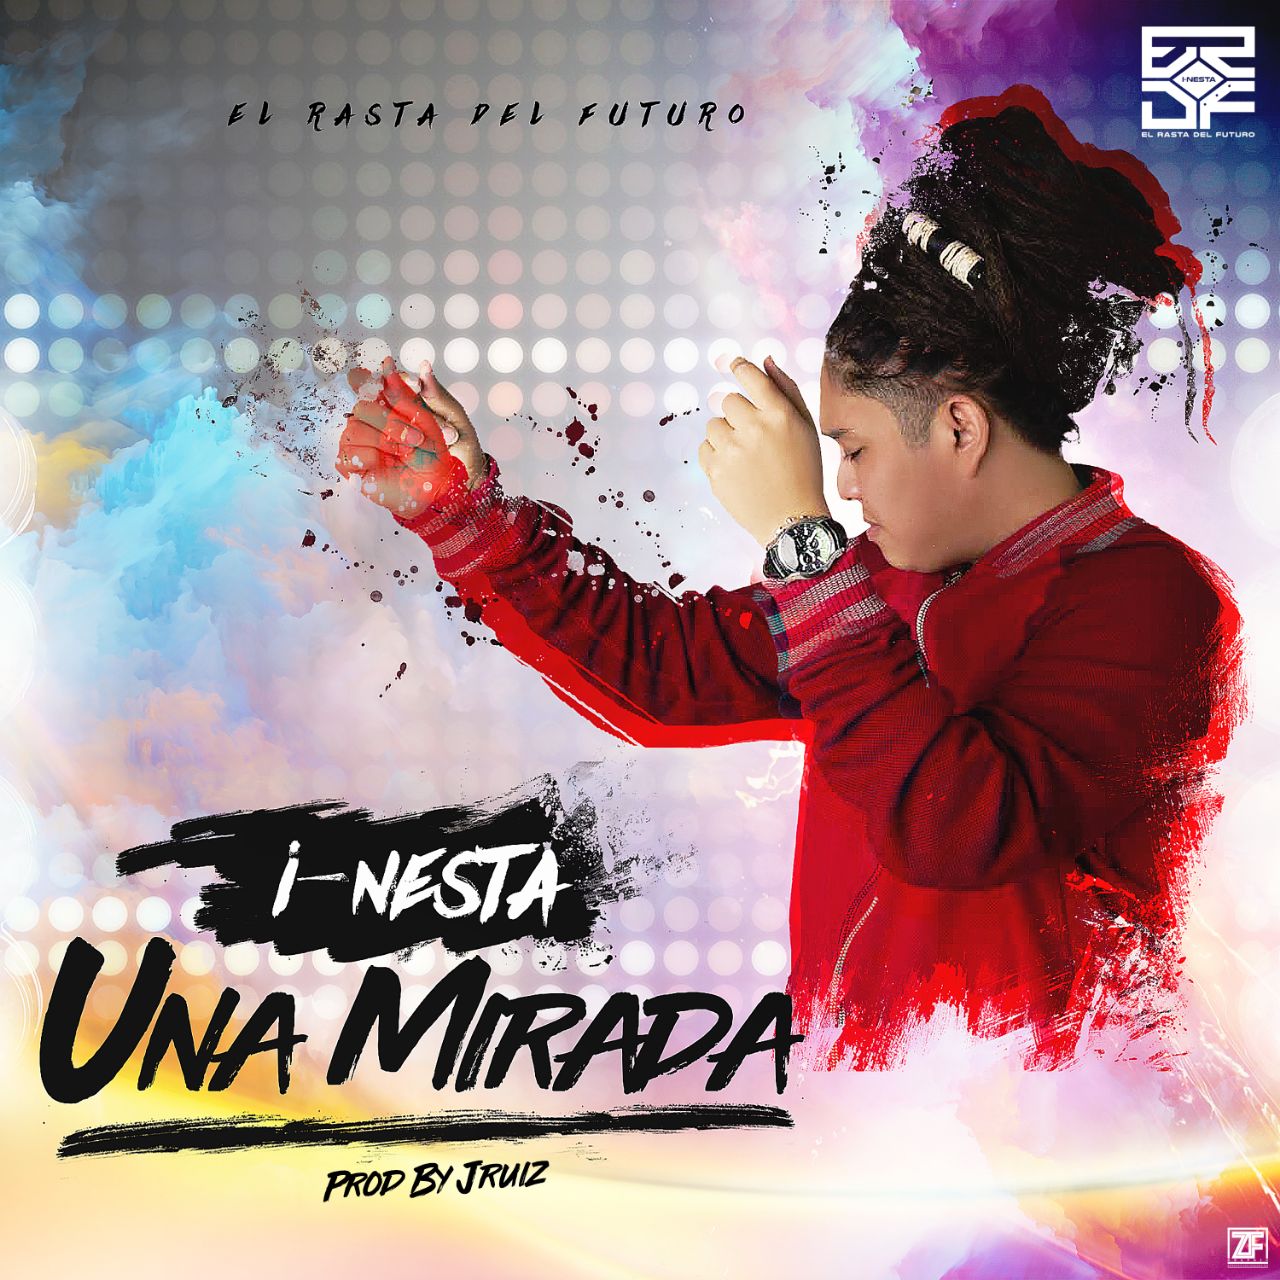 Photo of I Nesta estrena su nuevo single ‘Una Mirada’